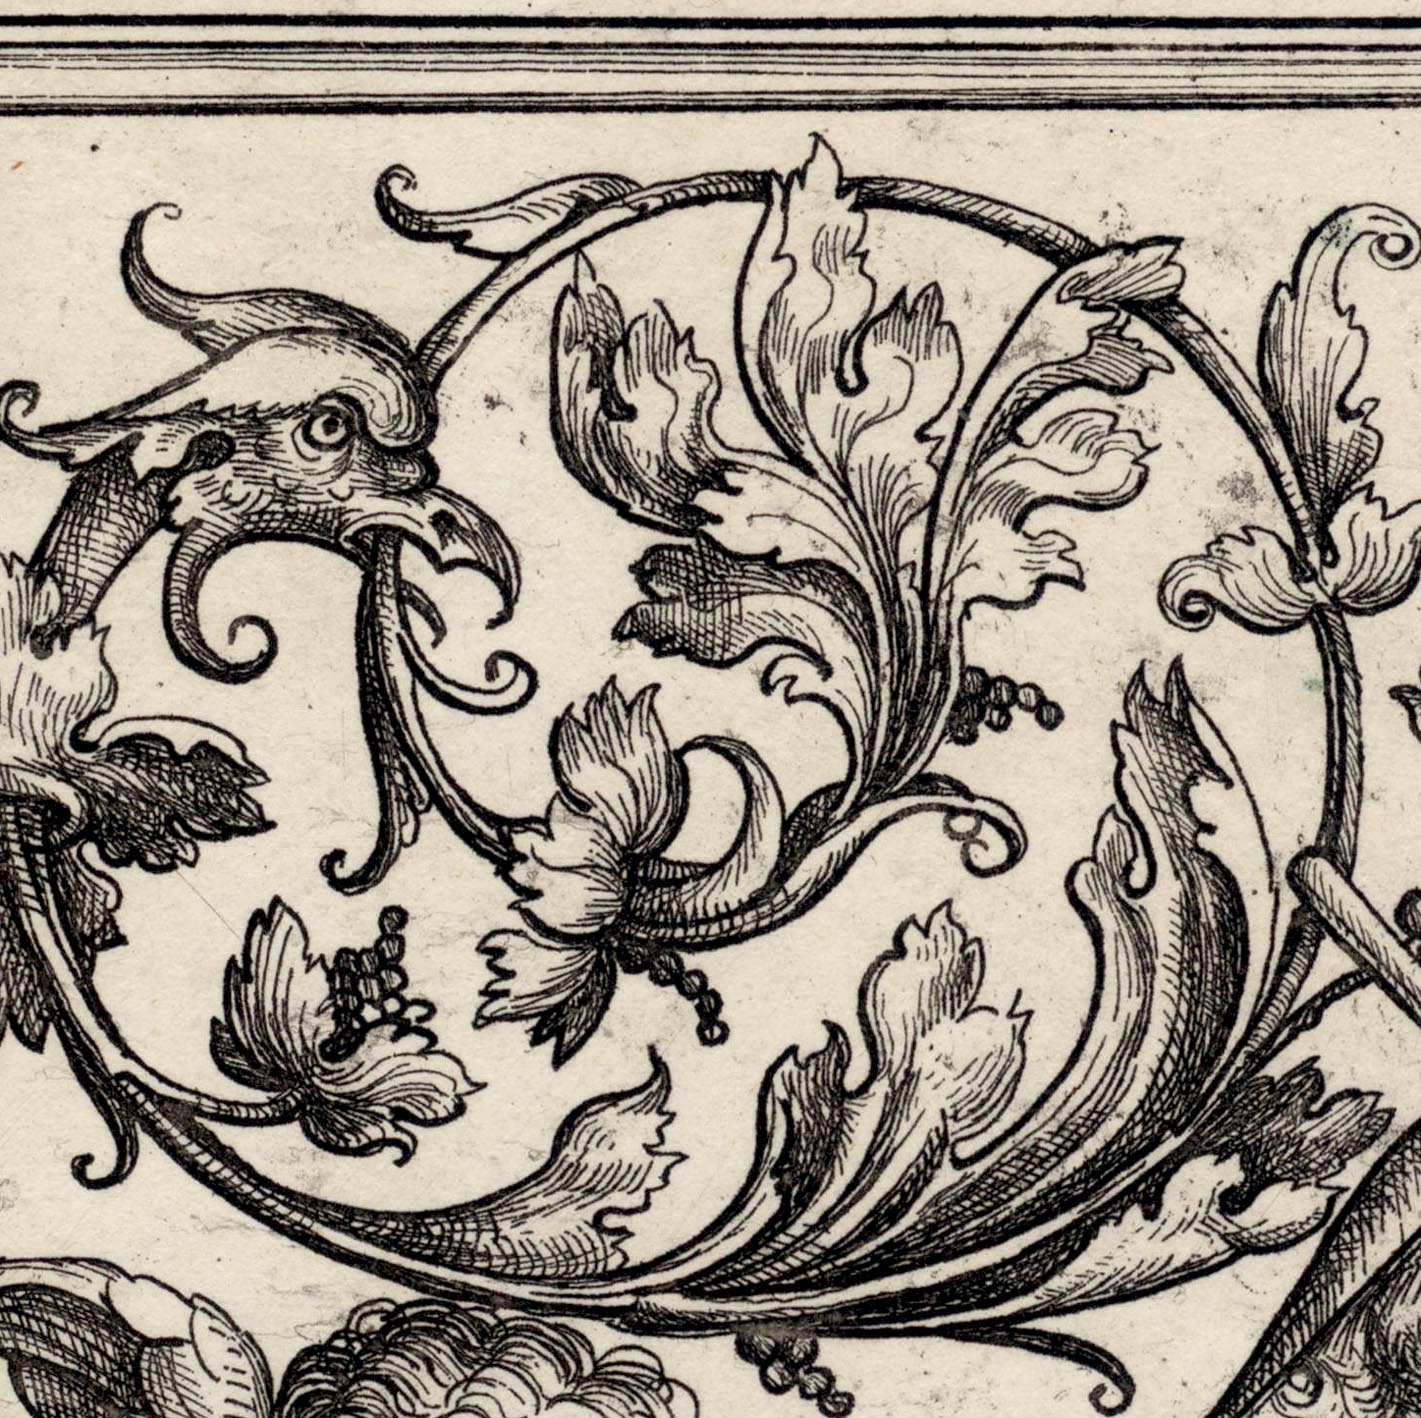 Prints and Principles: Daniel Hopfer’s etching, “Design for Ornamental ...